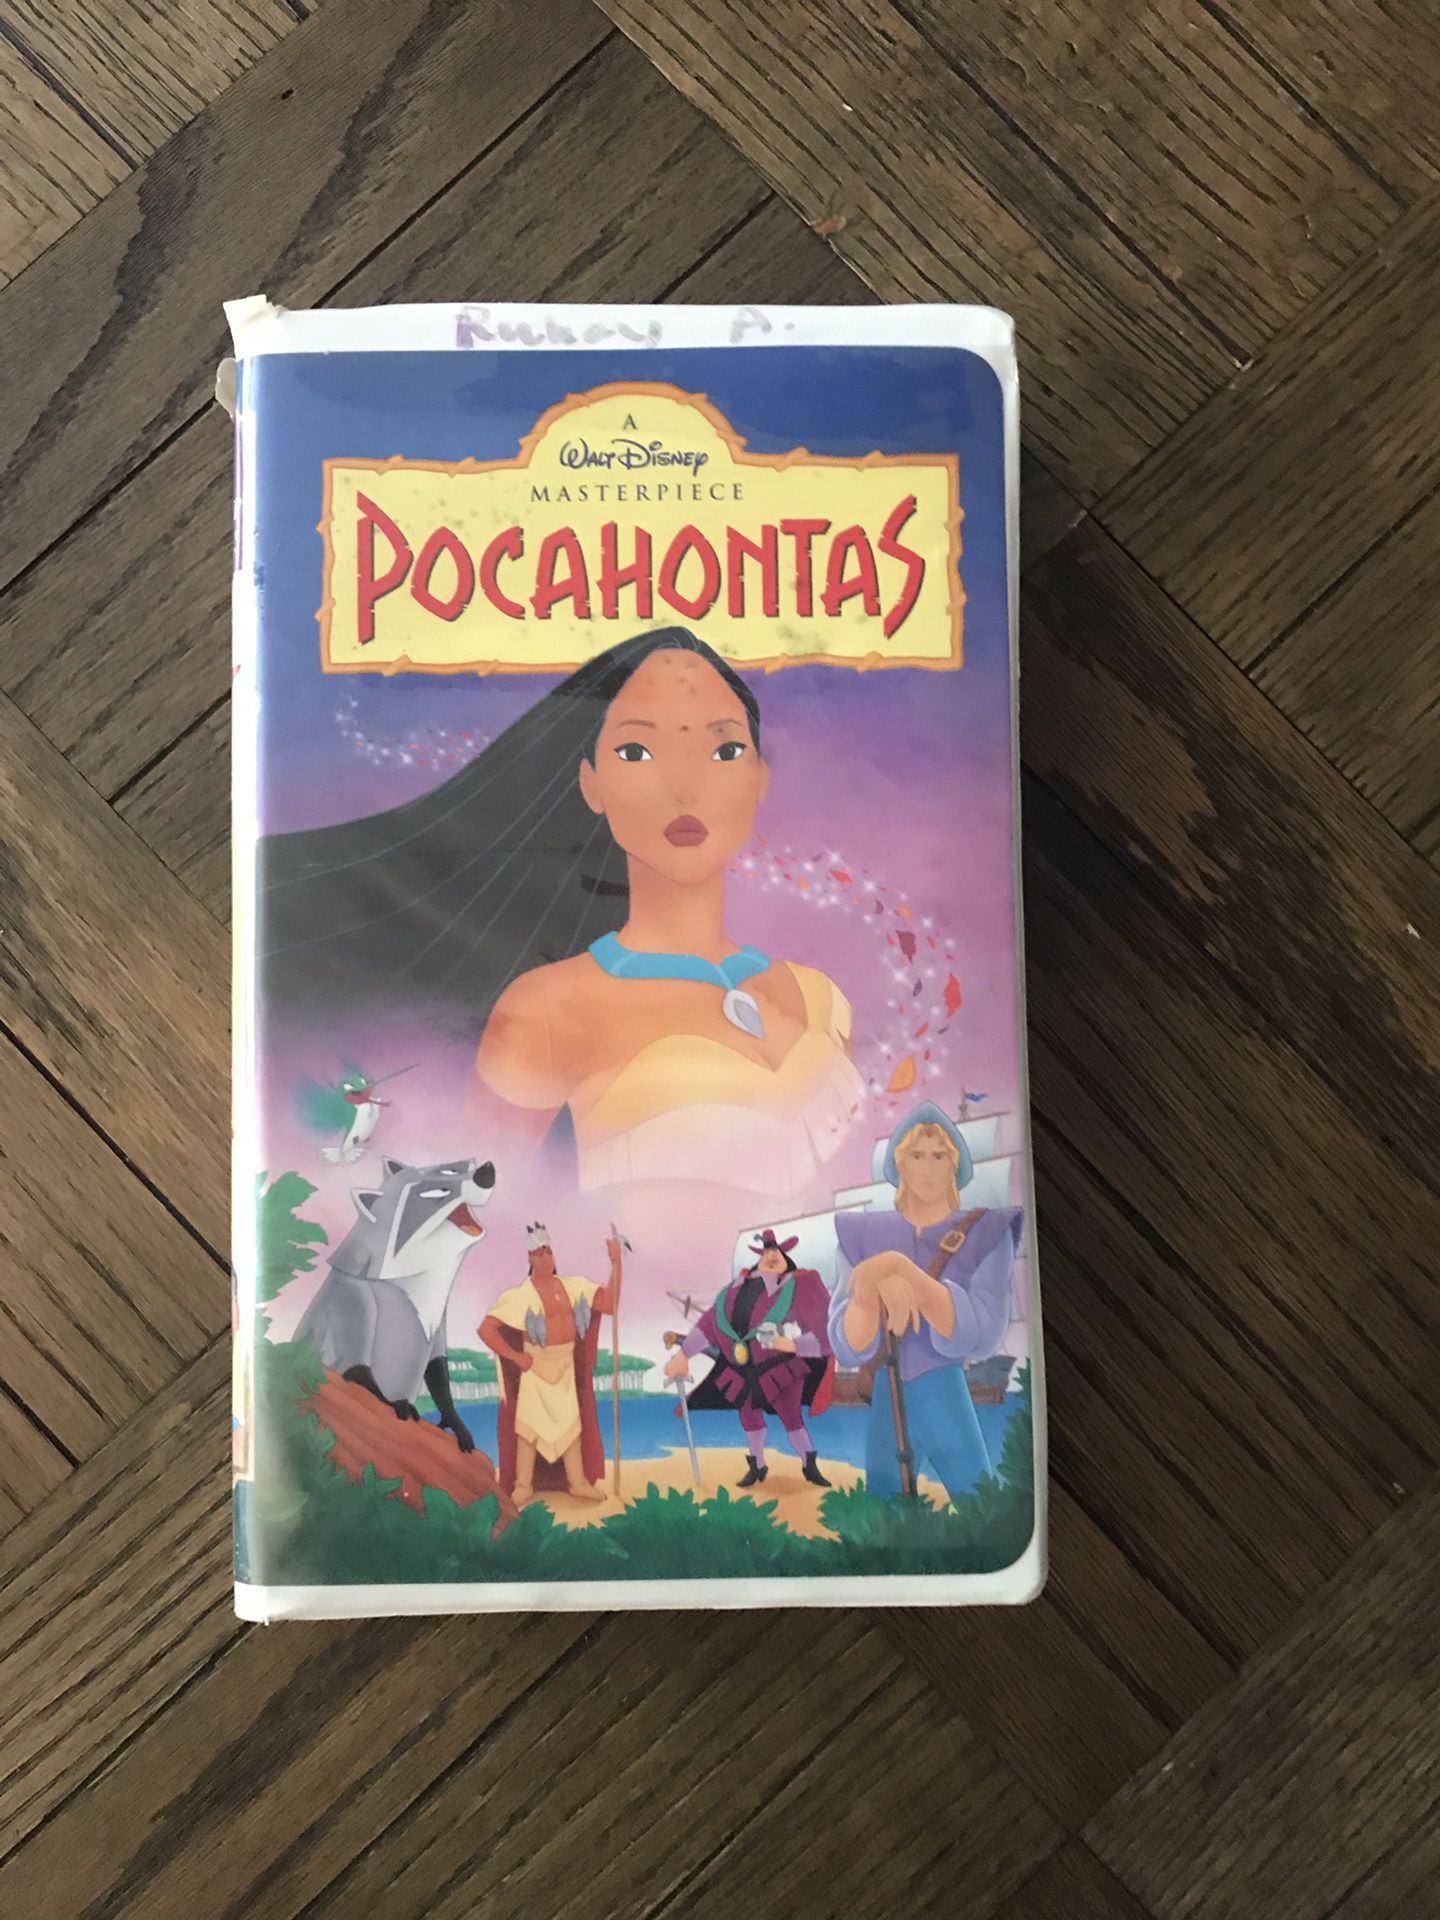 Disney classics in video tape